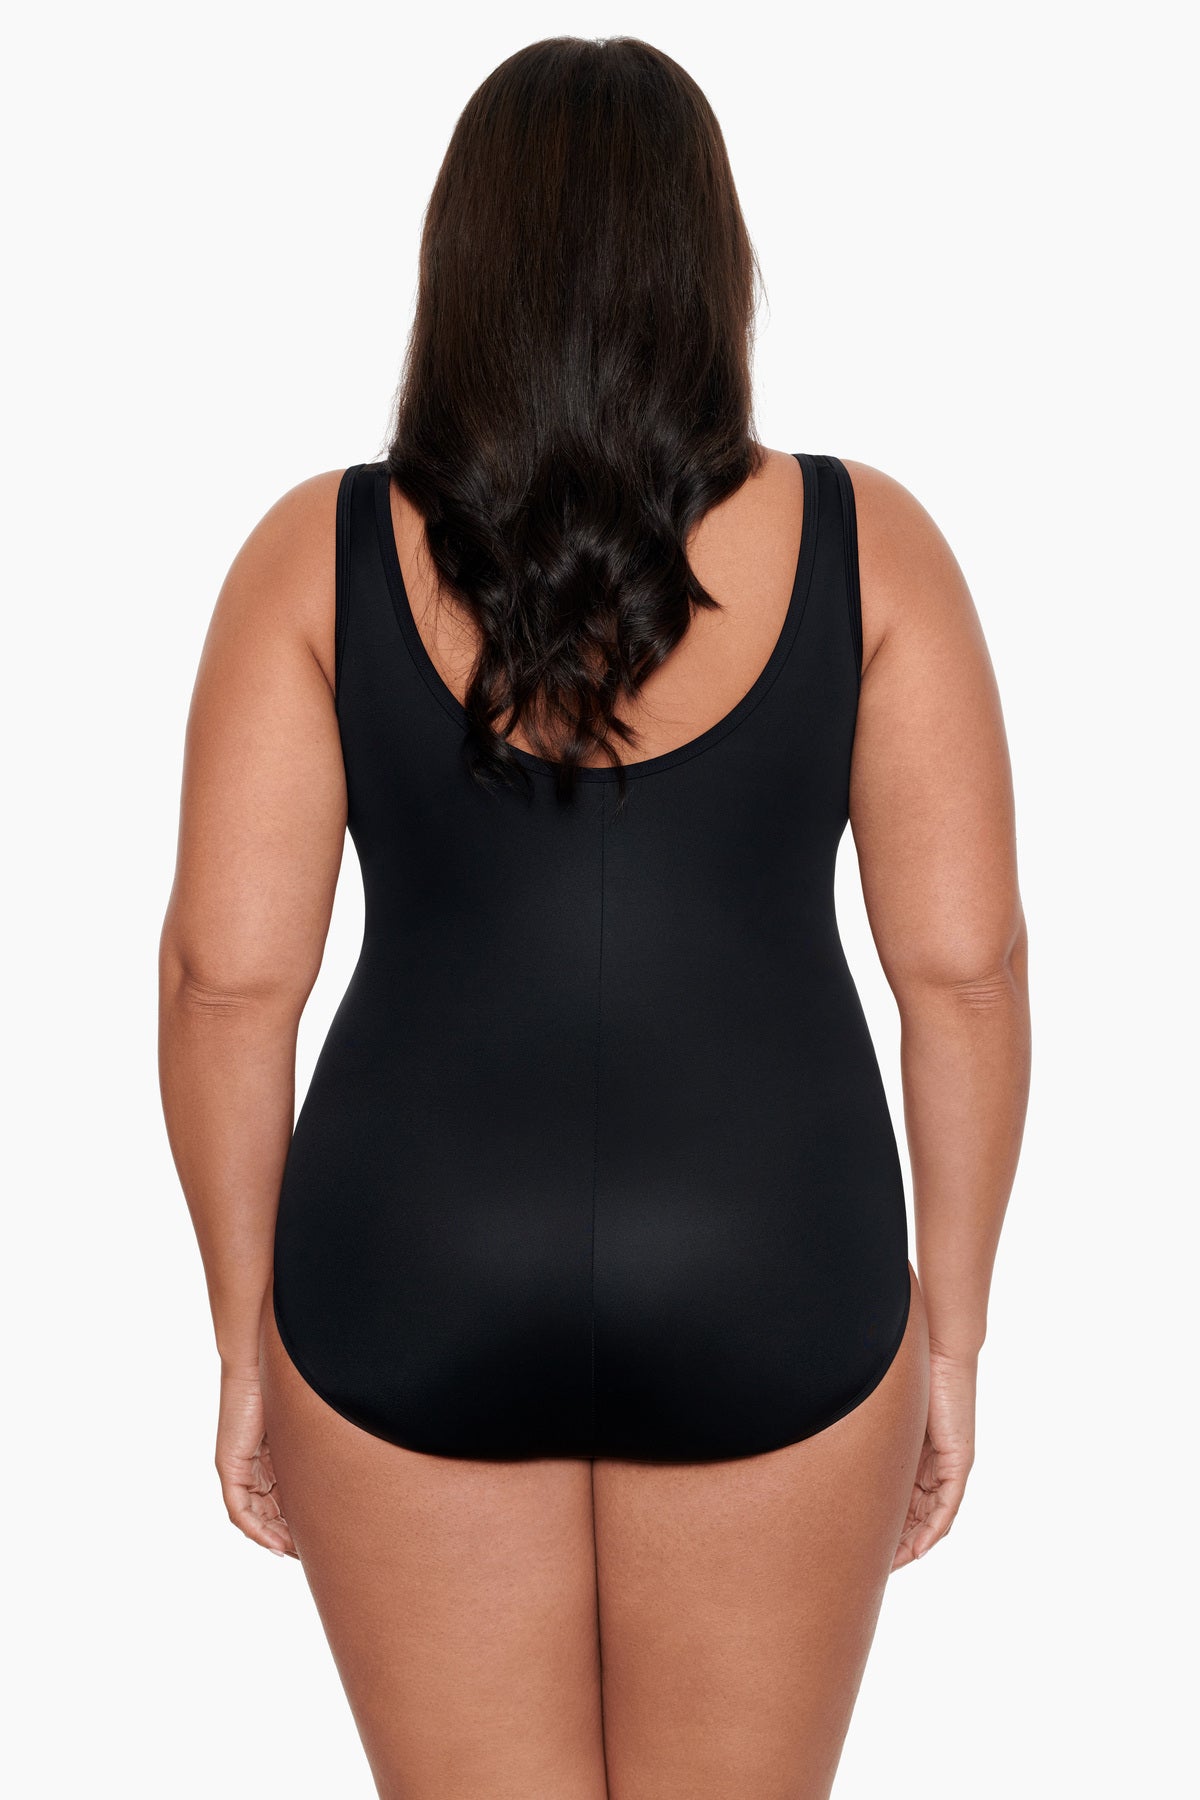  Women Black Plus Size One Piece Swimsuits Tummy Control  Ruffle Off Shoulder Bathing Suits 18 Plus